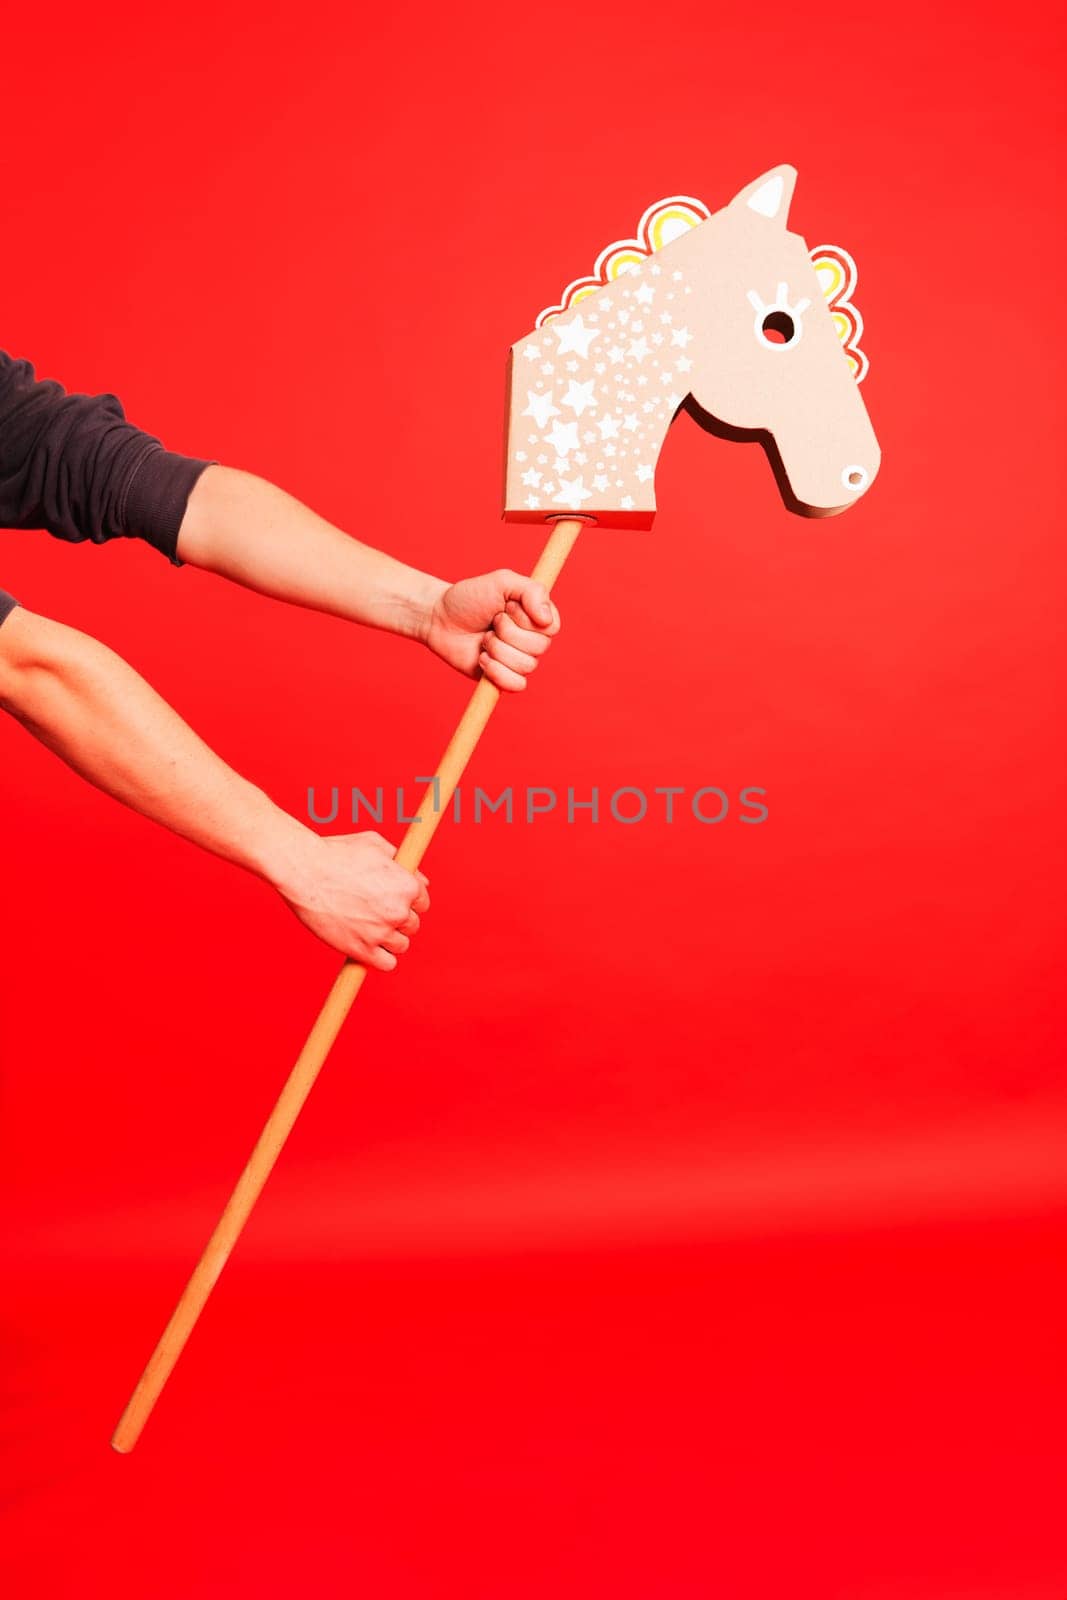 Stick horse, hobby horse. Equestrian sports or Equestrian equipment.